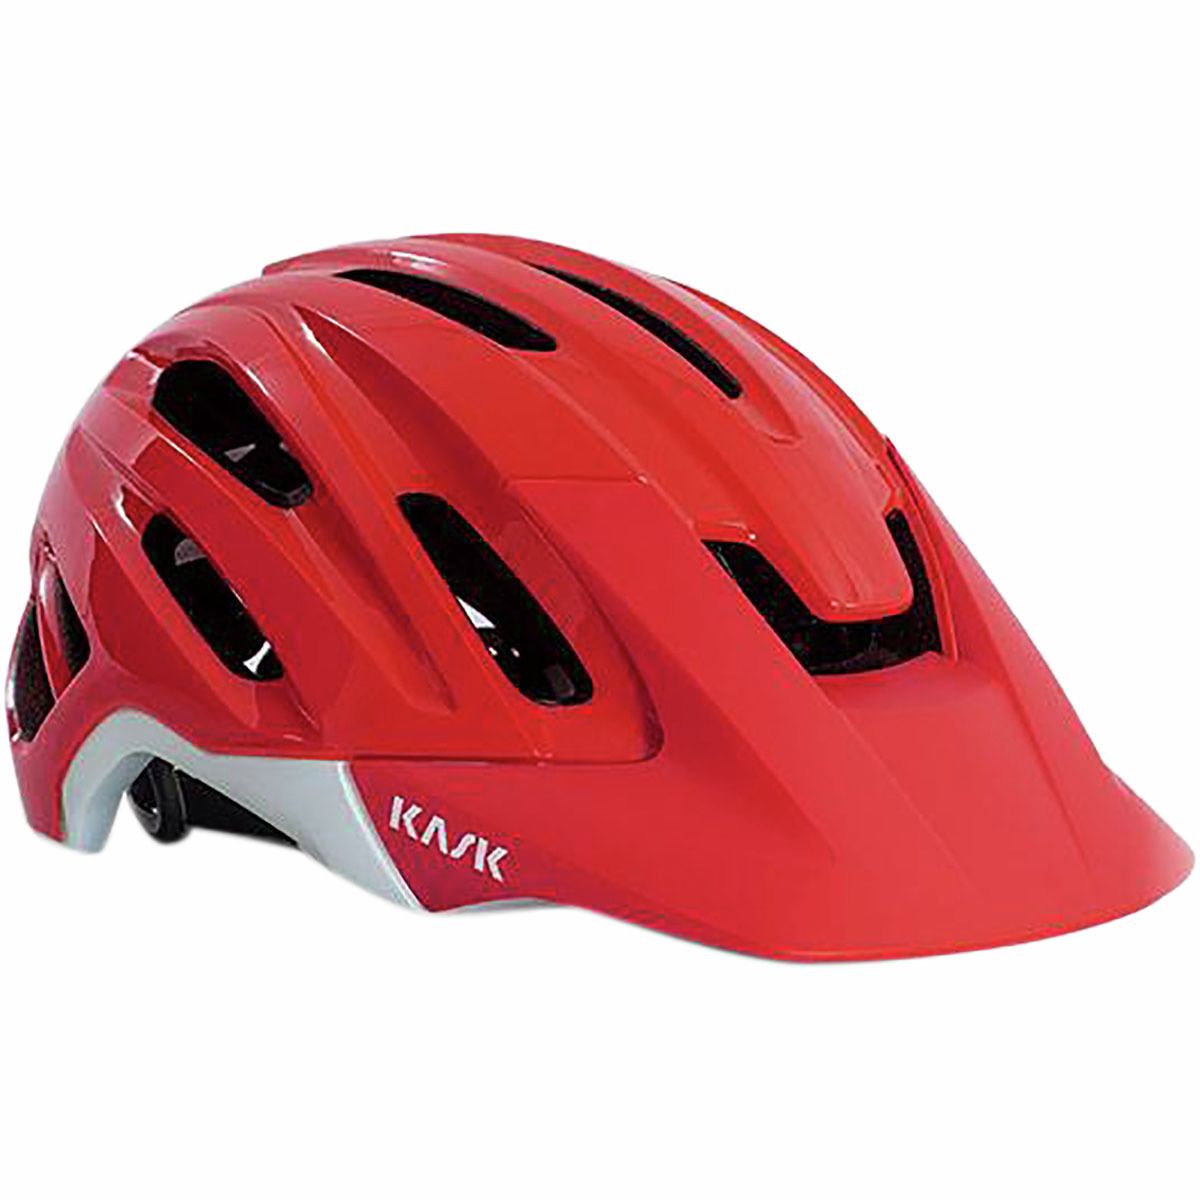 Kask Caipi Bike Helmet - Men's